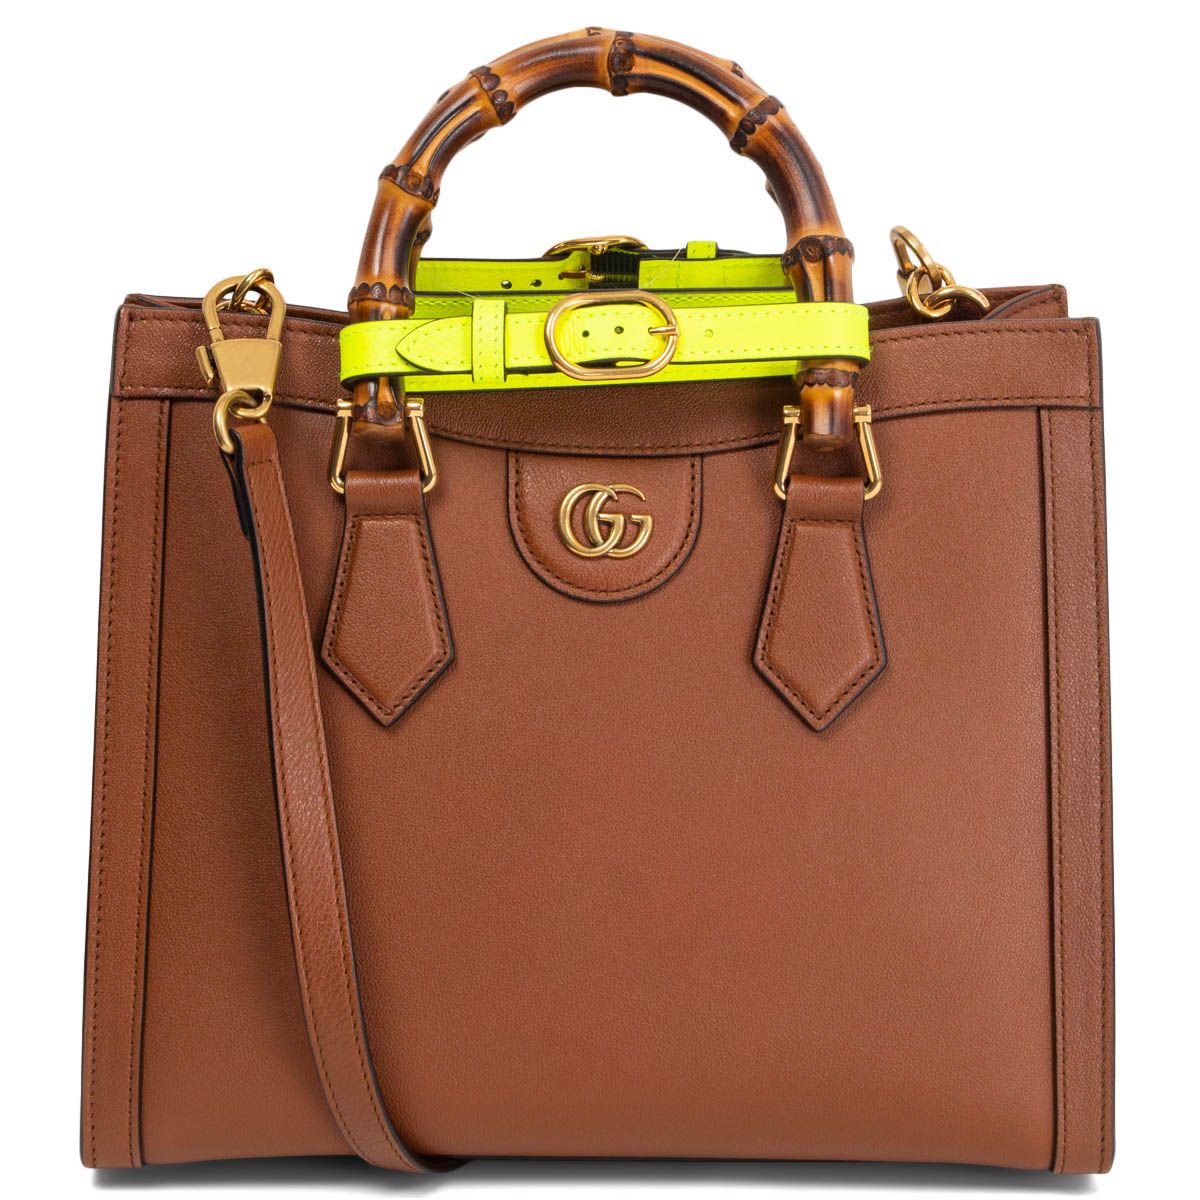 Buy Gucci Handbag With Original Box and Dust Bag (Brown) (J057)